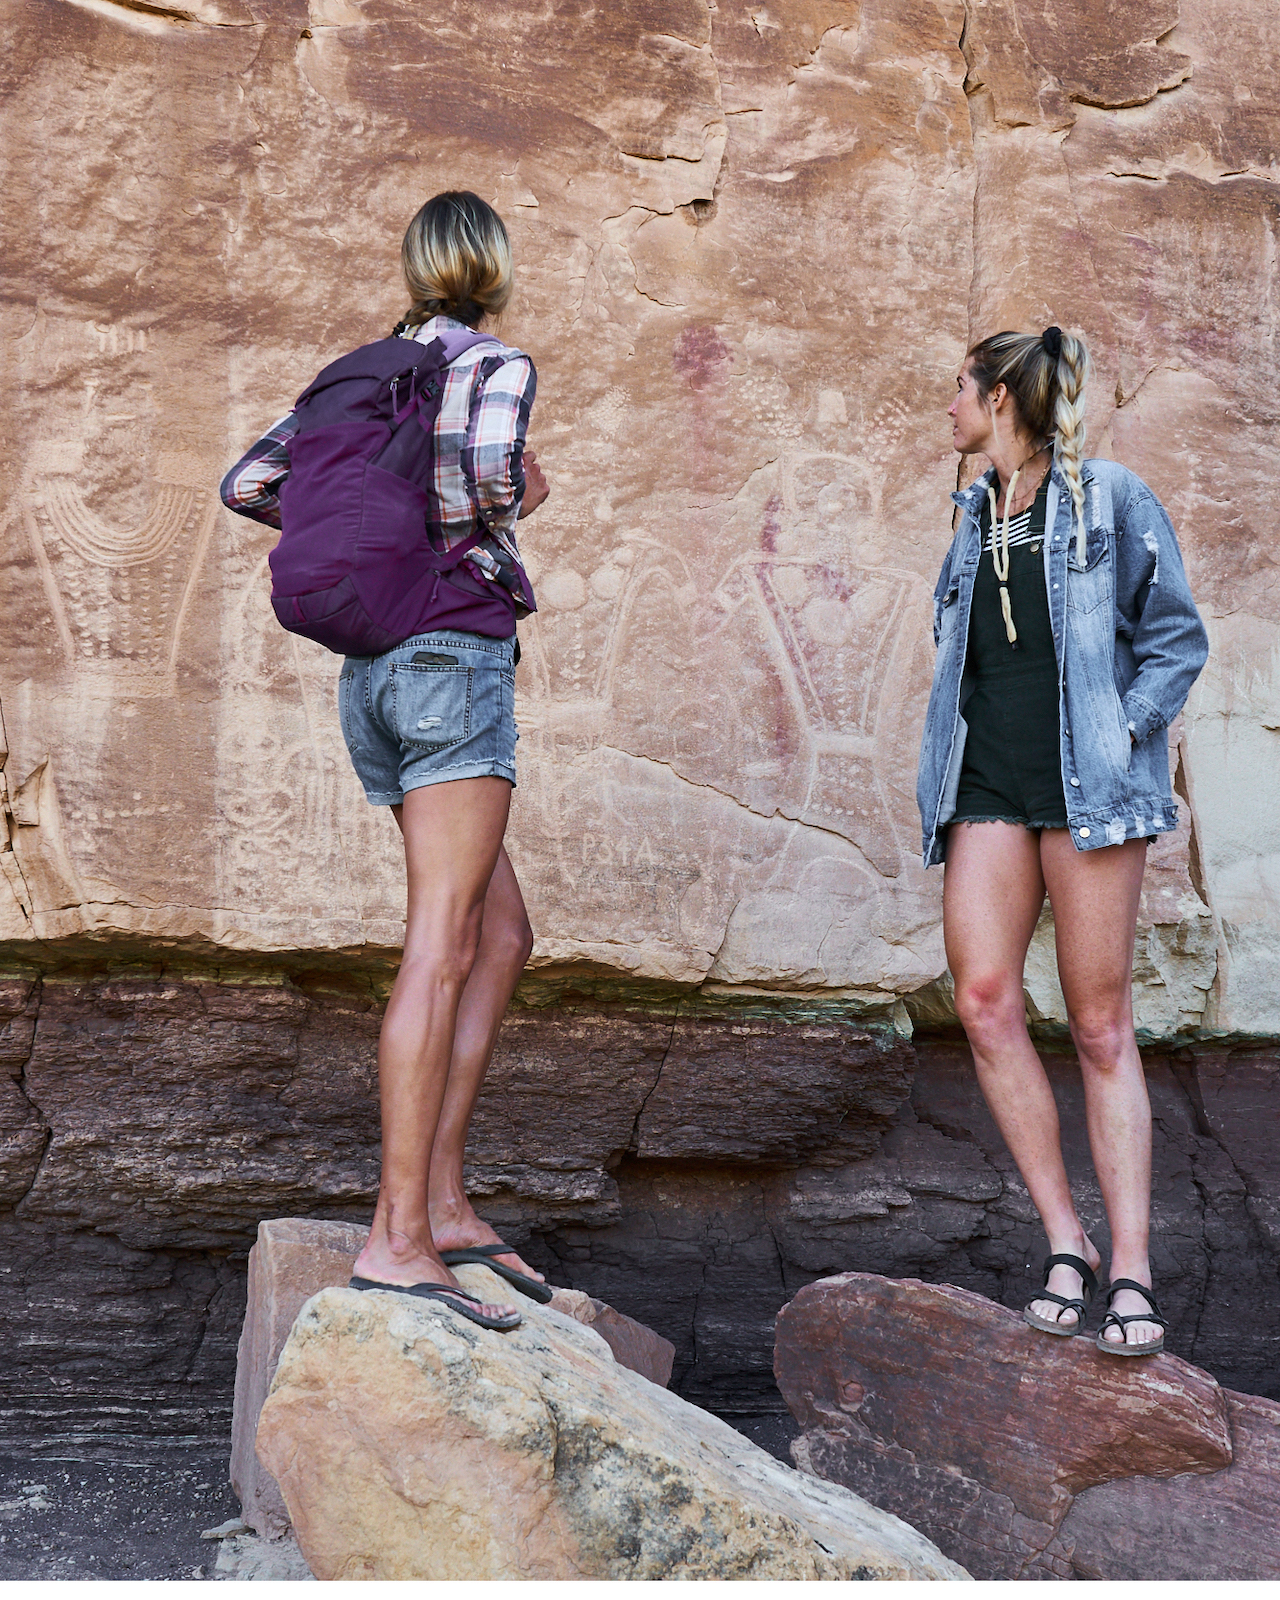 Two hikers looking at petroglyphs at Smithsonian Butte, Dinosaurland, Utah